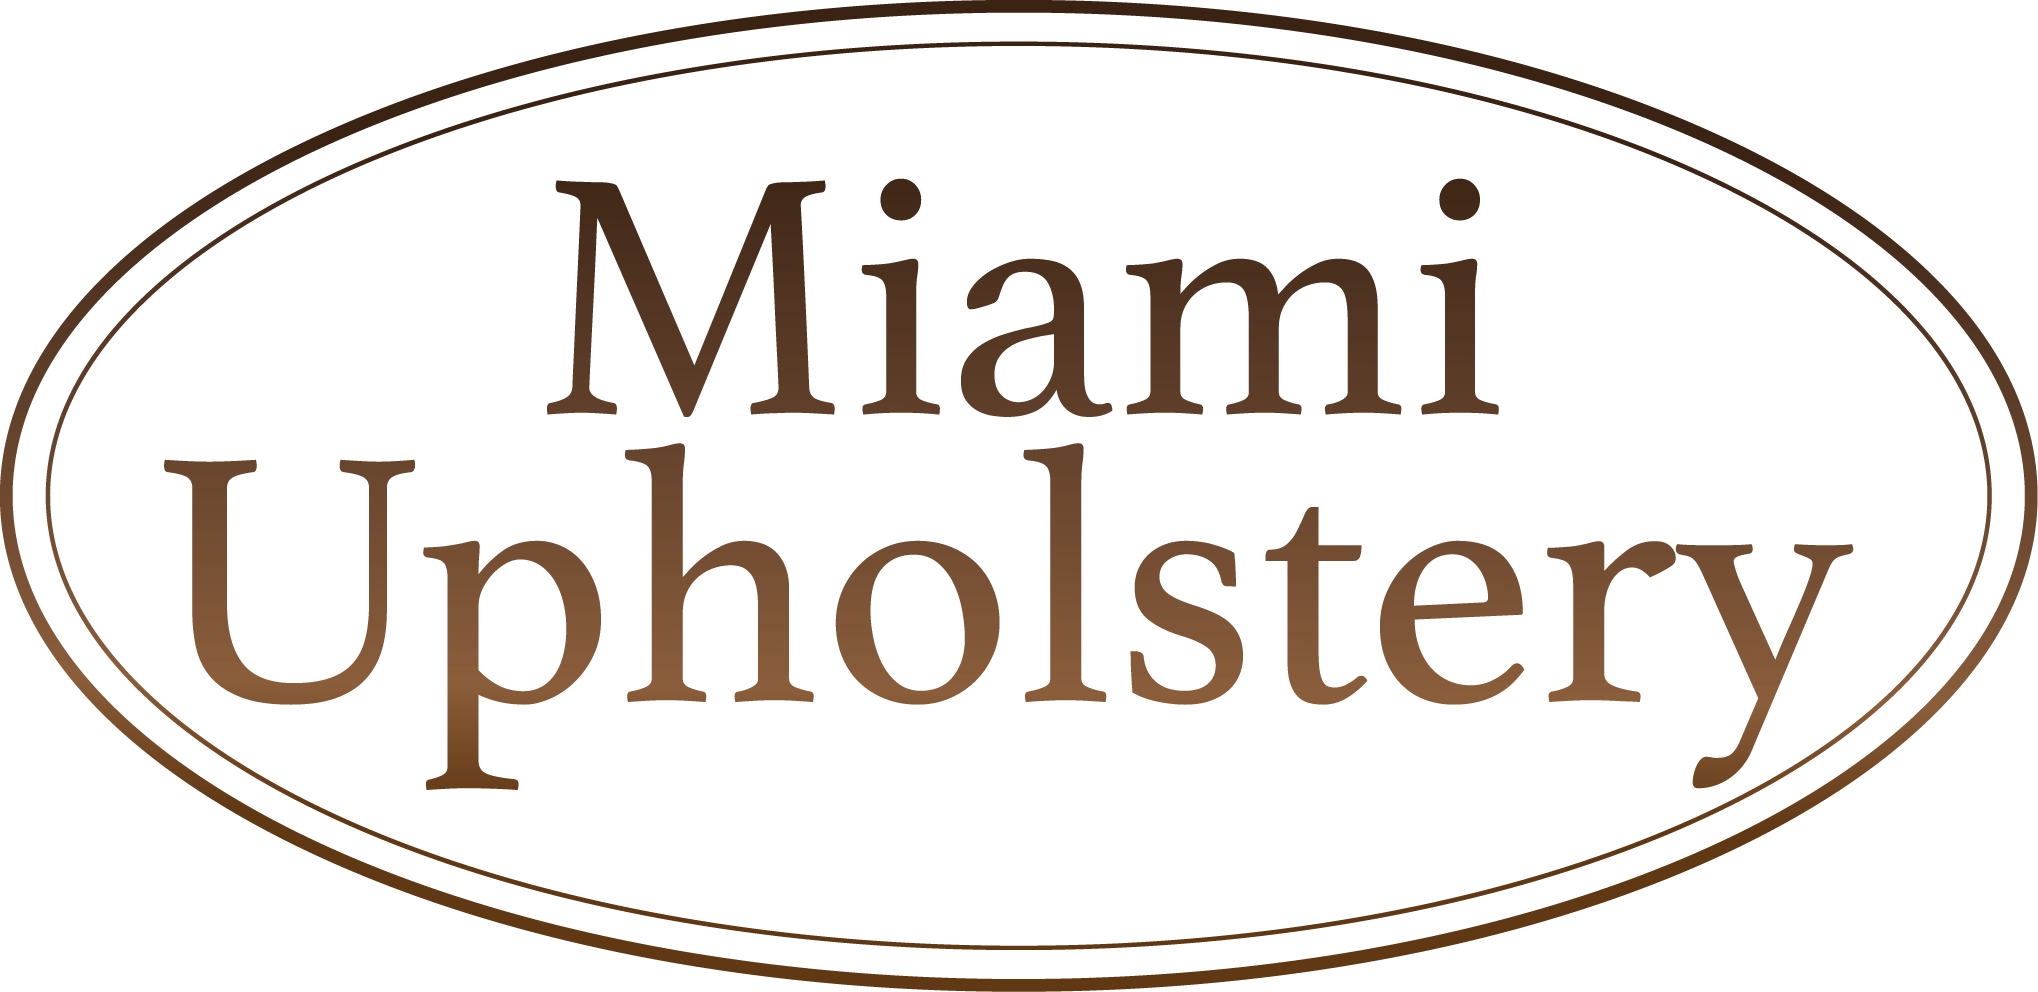 Miami Upholstery